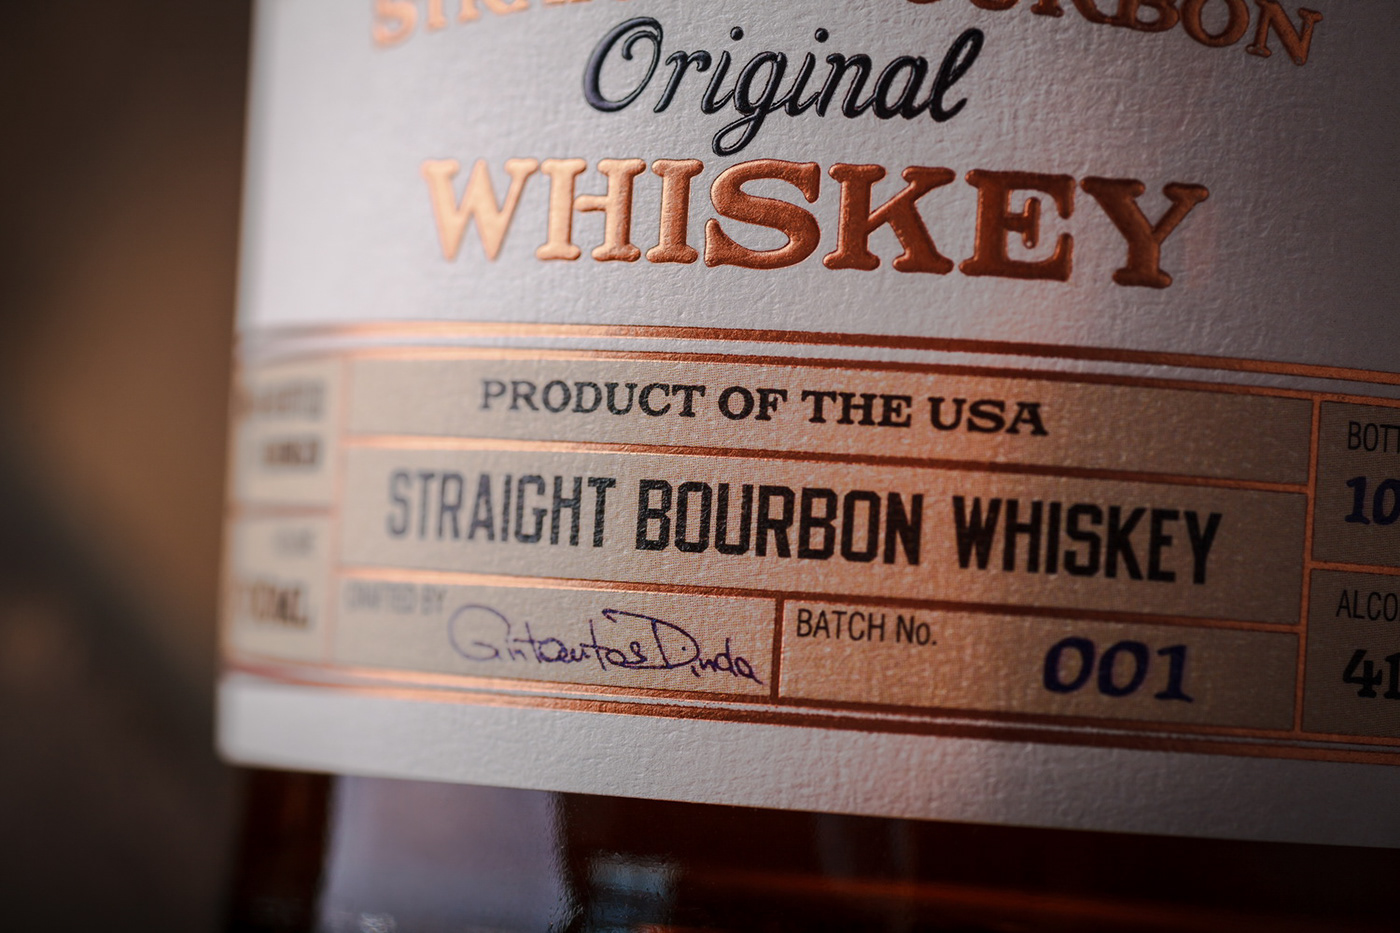 bandwagon 43oz Moldova belgium label design bourbon Whiskey Packaging sodiko